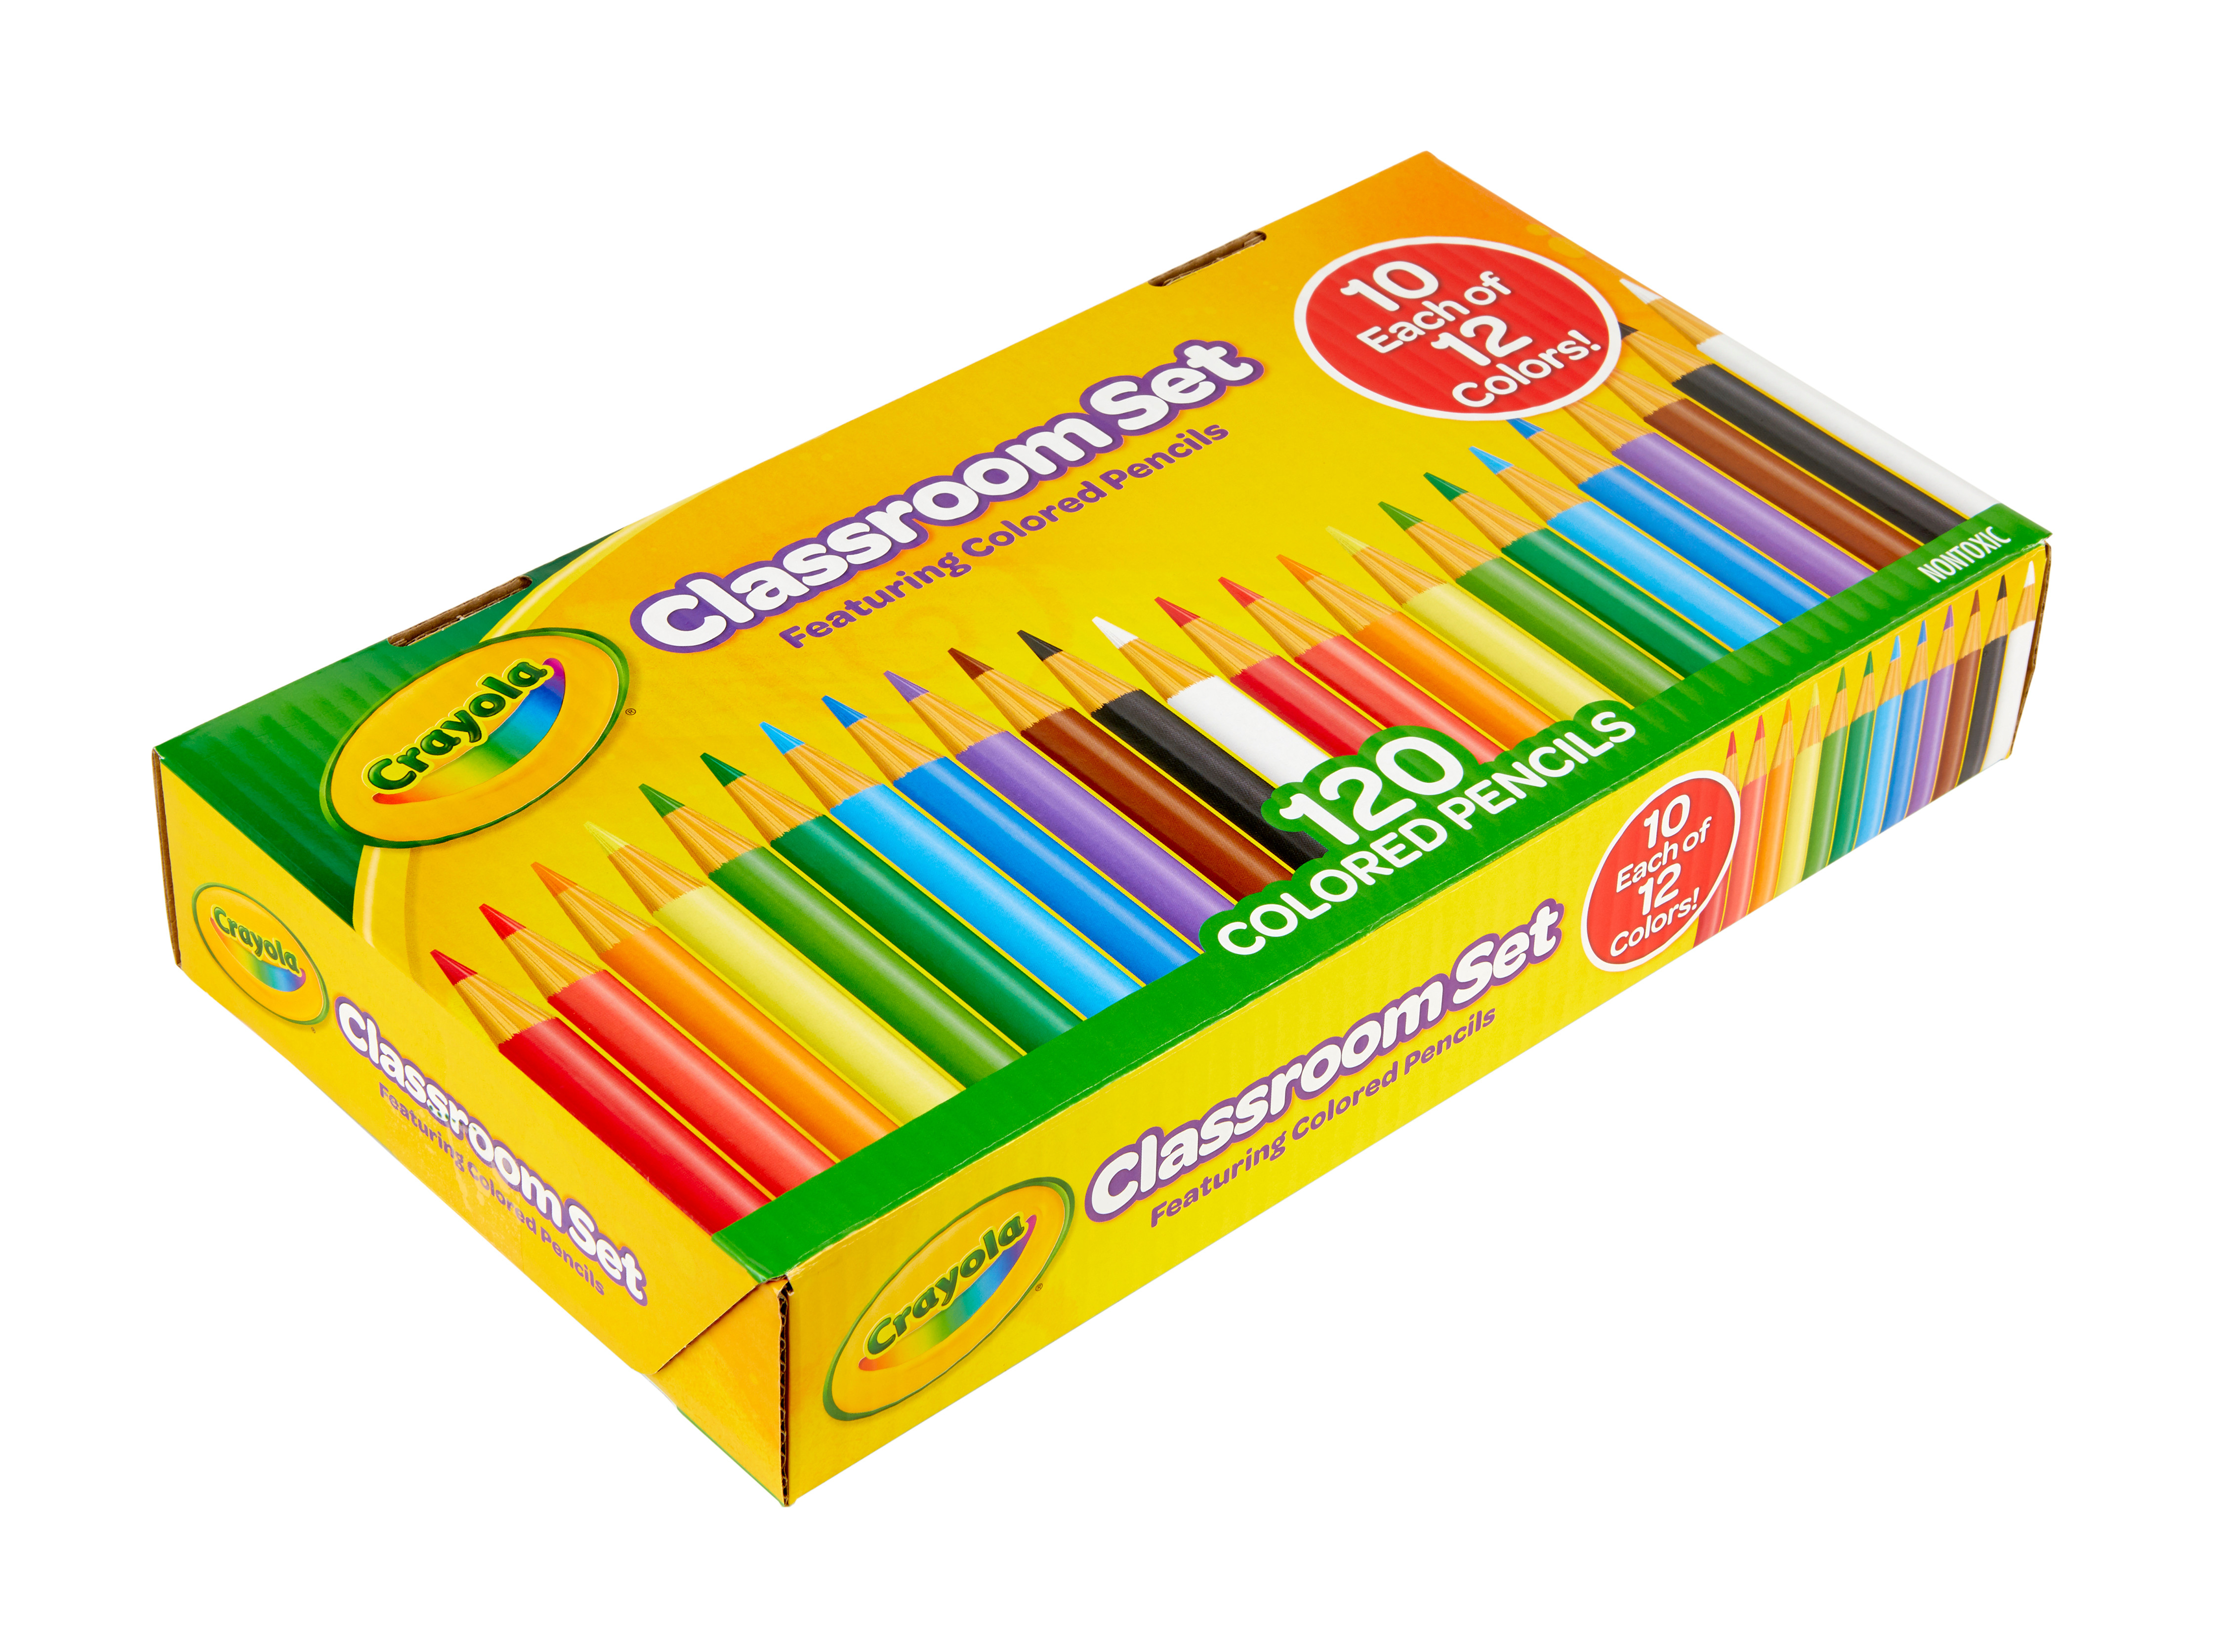 Crayola Classroom Set Colored Pencils, 120 Ct, Teacher Supplies, Teacher Gifts, Beginner Child - image 2 of 6